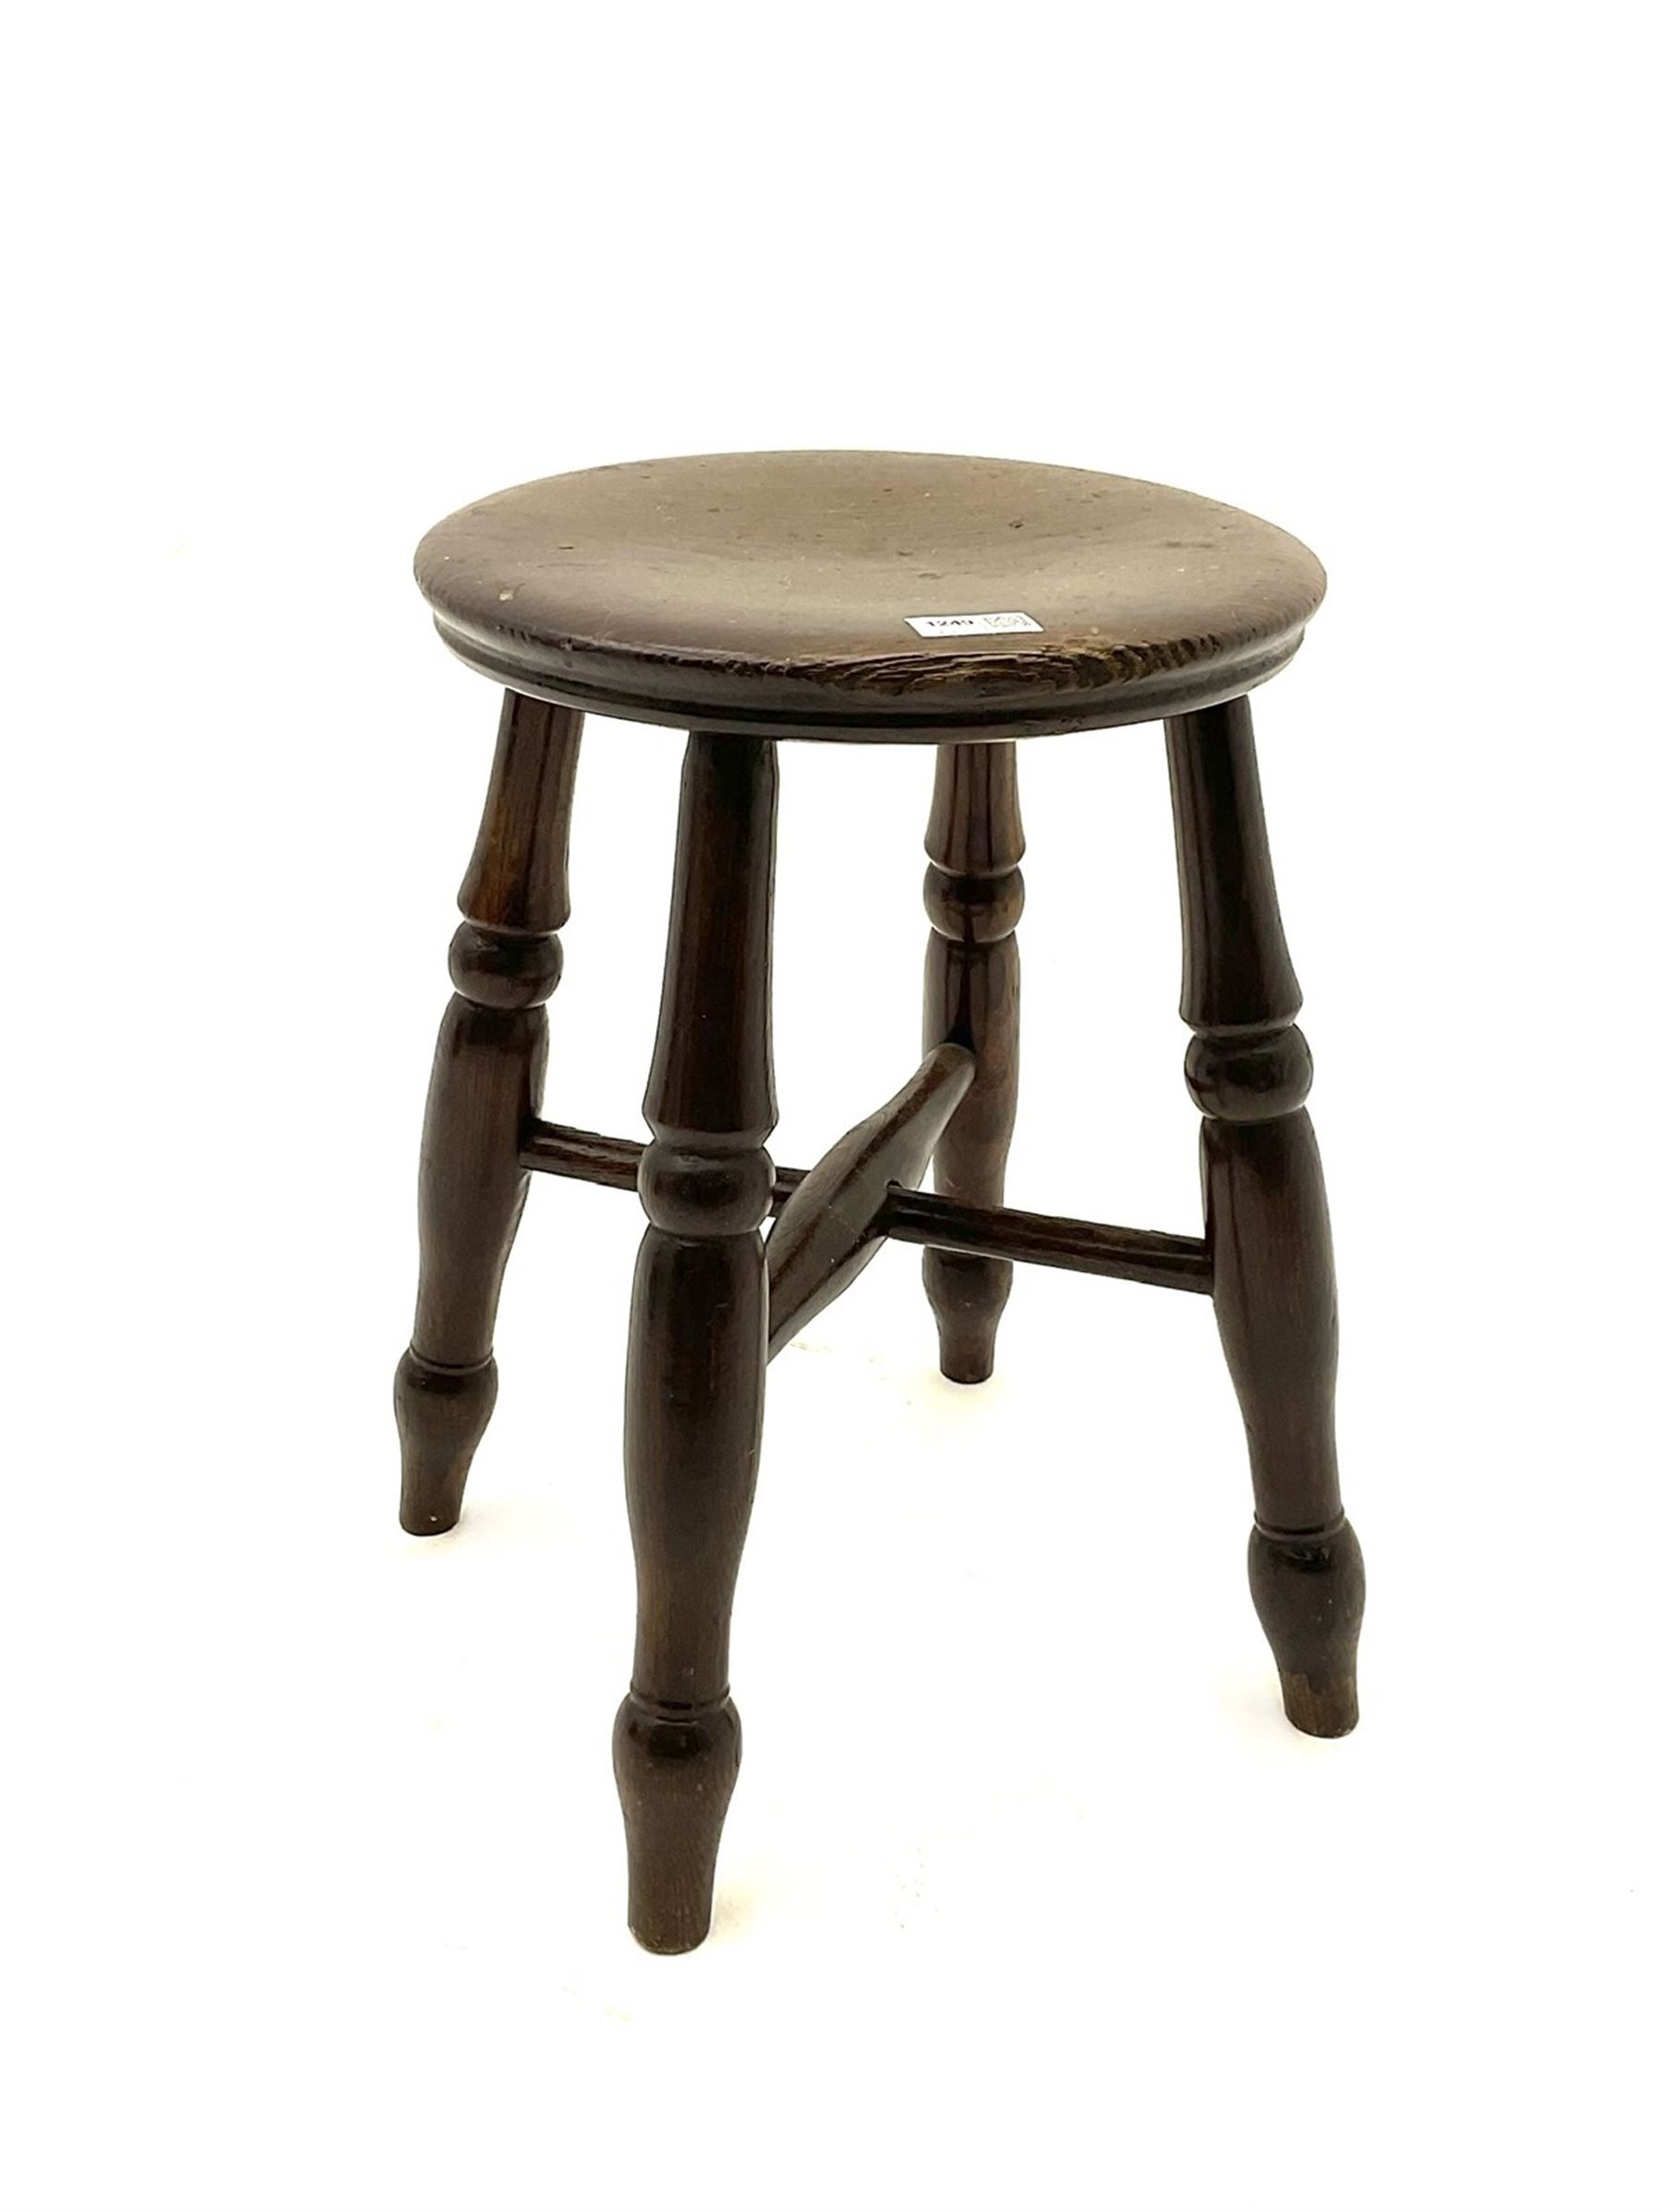 19th century elm stool